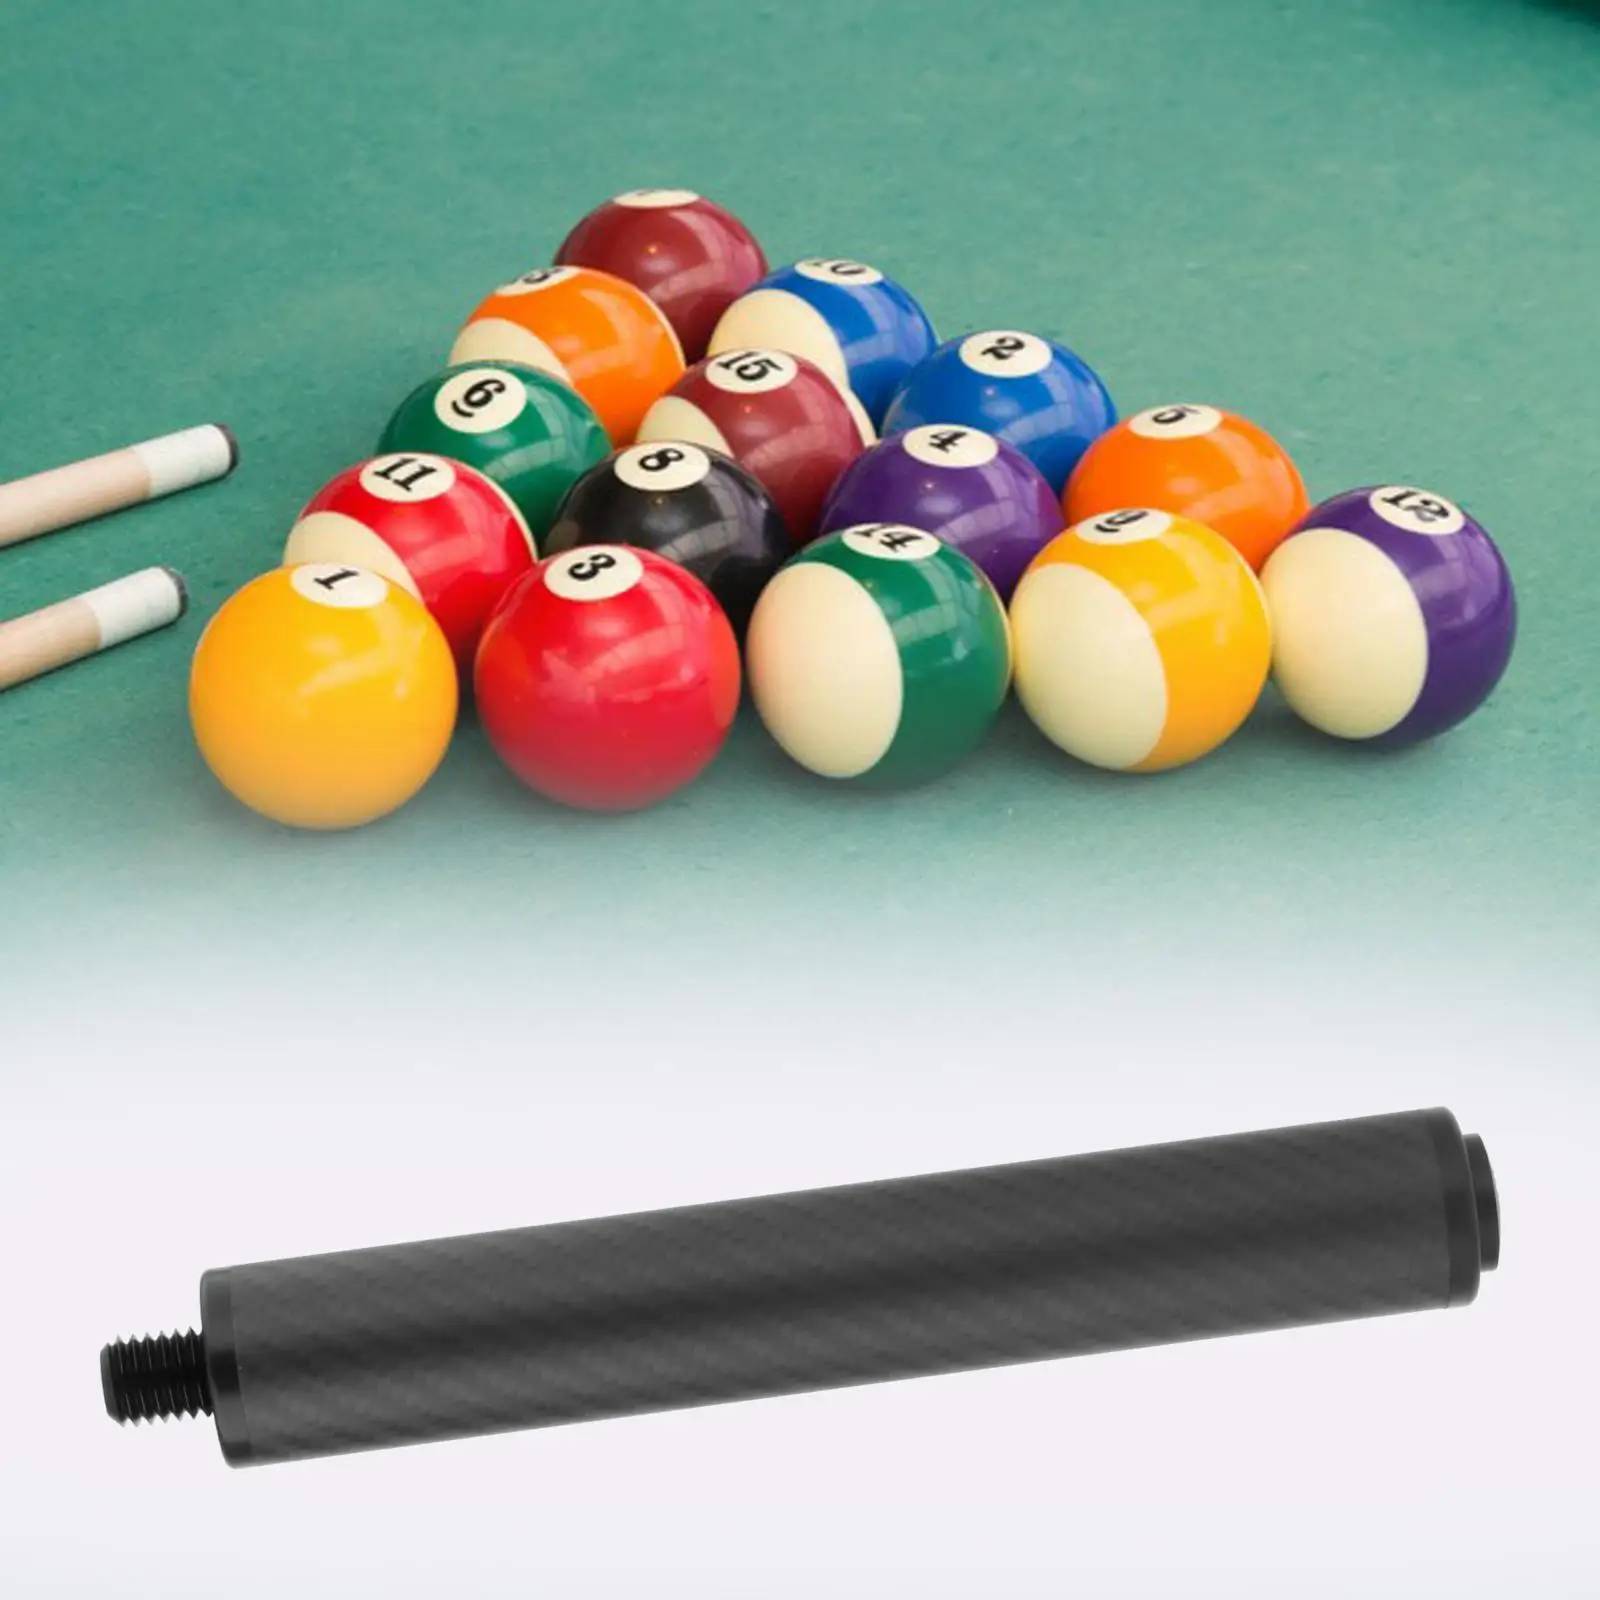 Billiard Pool Cue Extensions Rear Plug with , Billiard Accessories, 15 inch